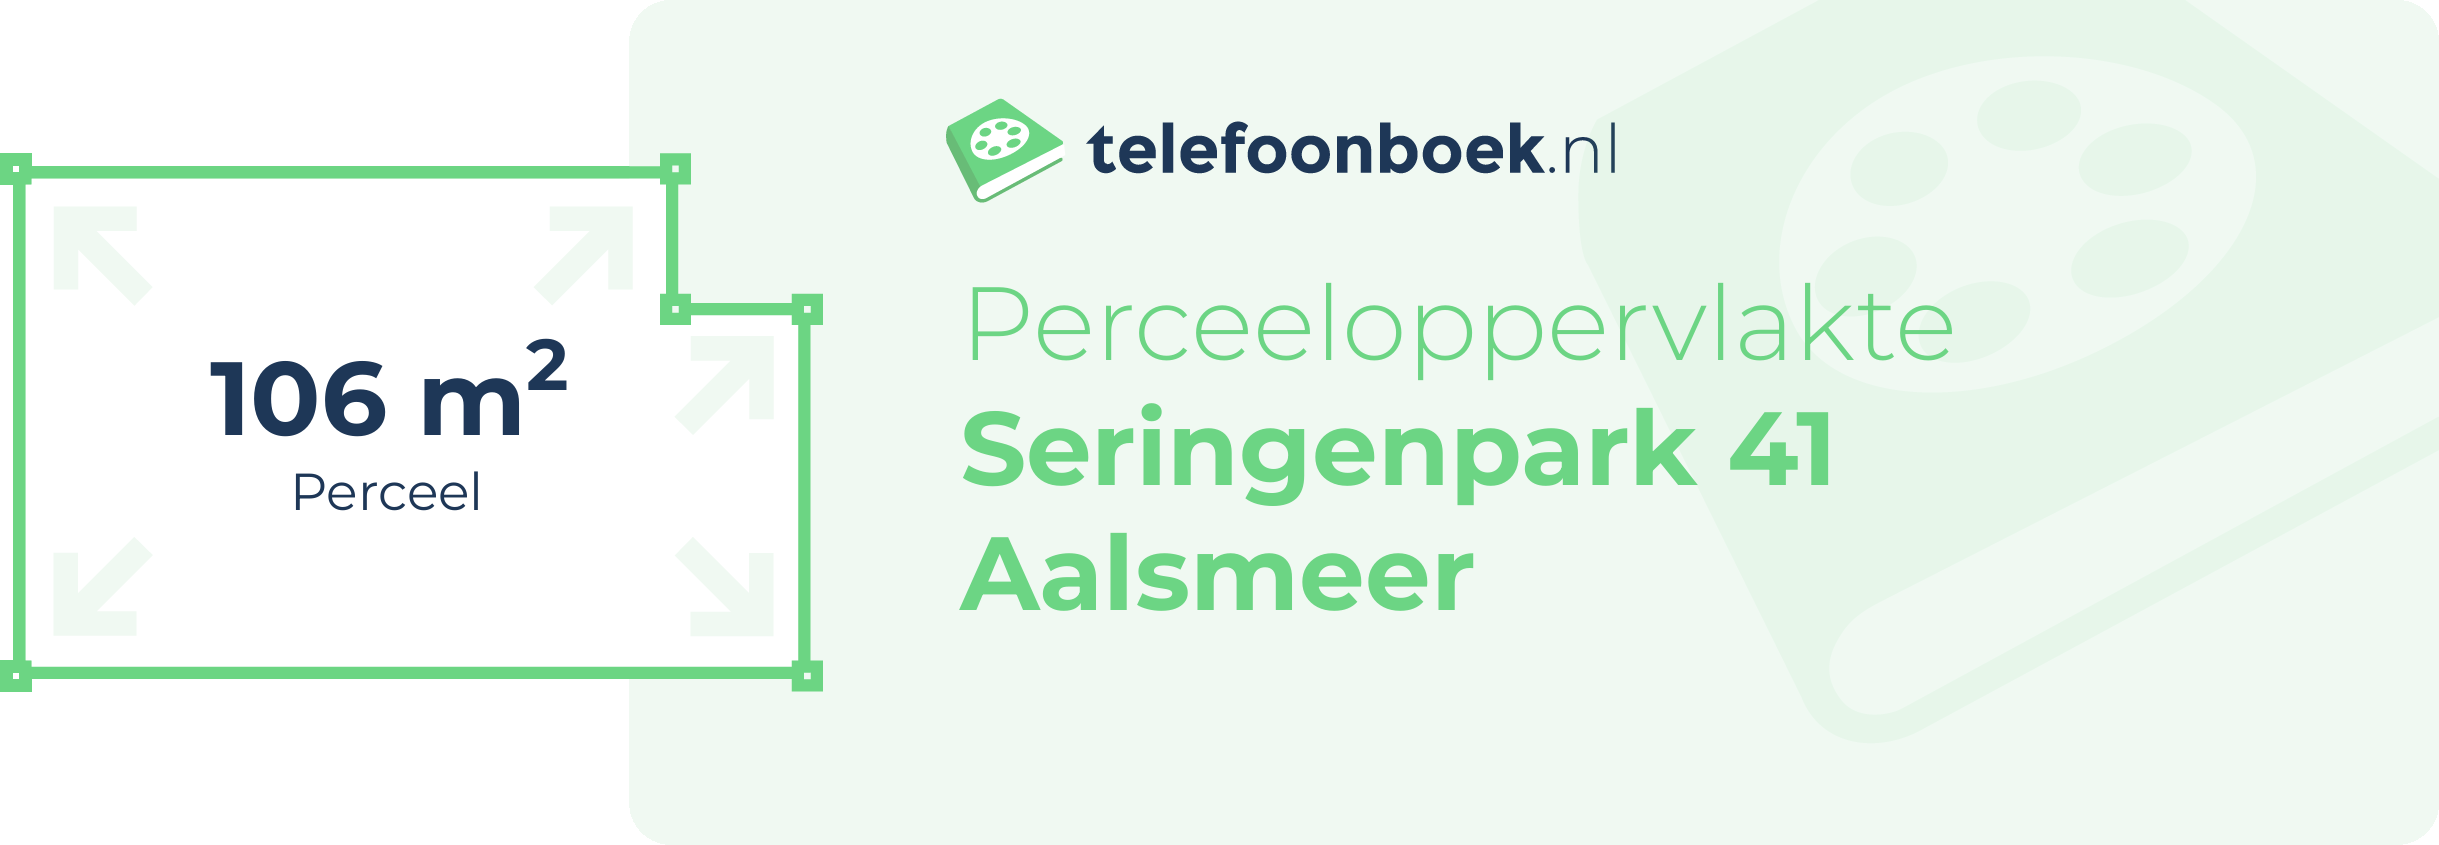 Perceeloppervlakte Seringenpark 41 Aalsmeer